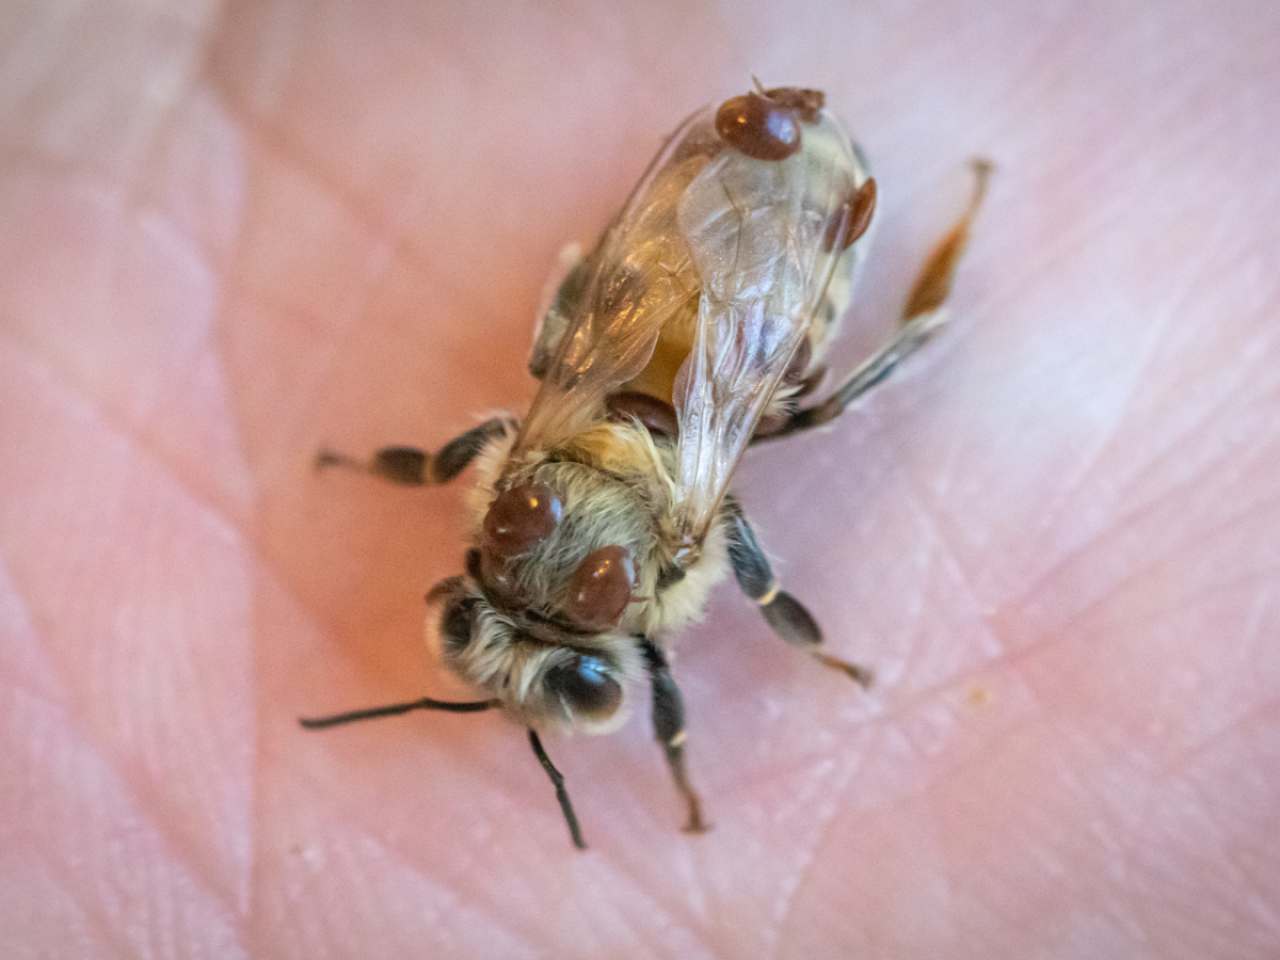 honey bee on hand with varroa mites